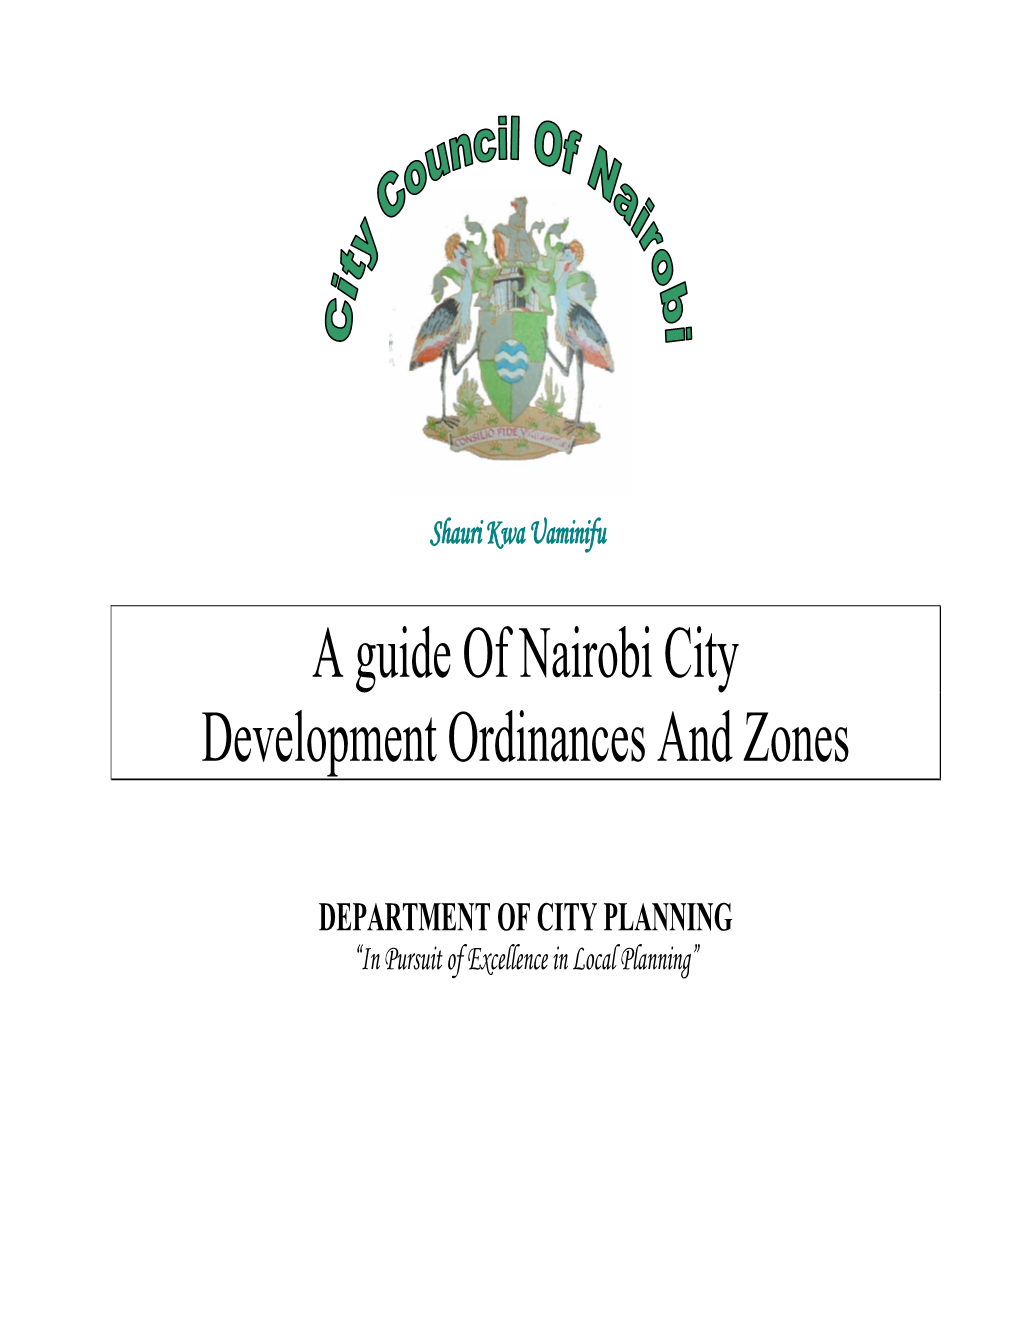 A Guide of Nairobi City Development Ordinances and Zones